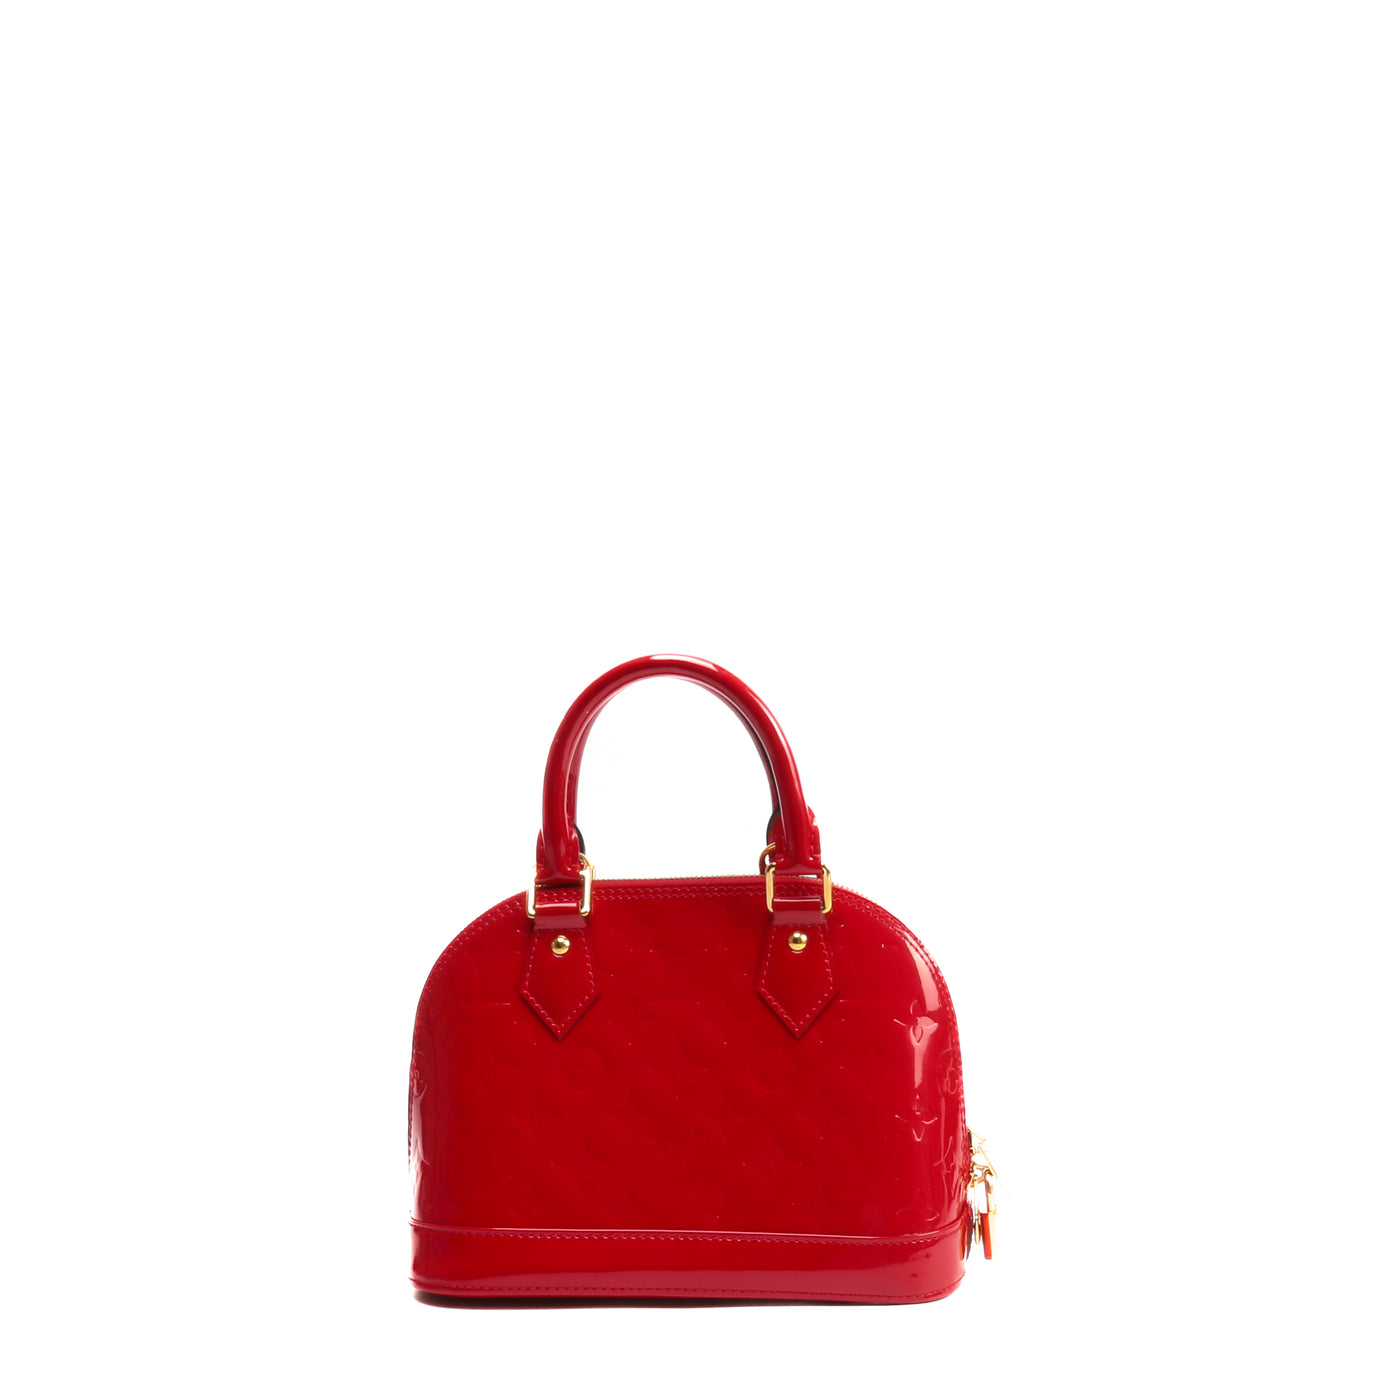 100% Authentic Louis Vuitton Vernis Beautiful Cherry Red / Black